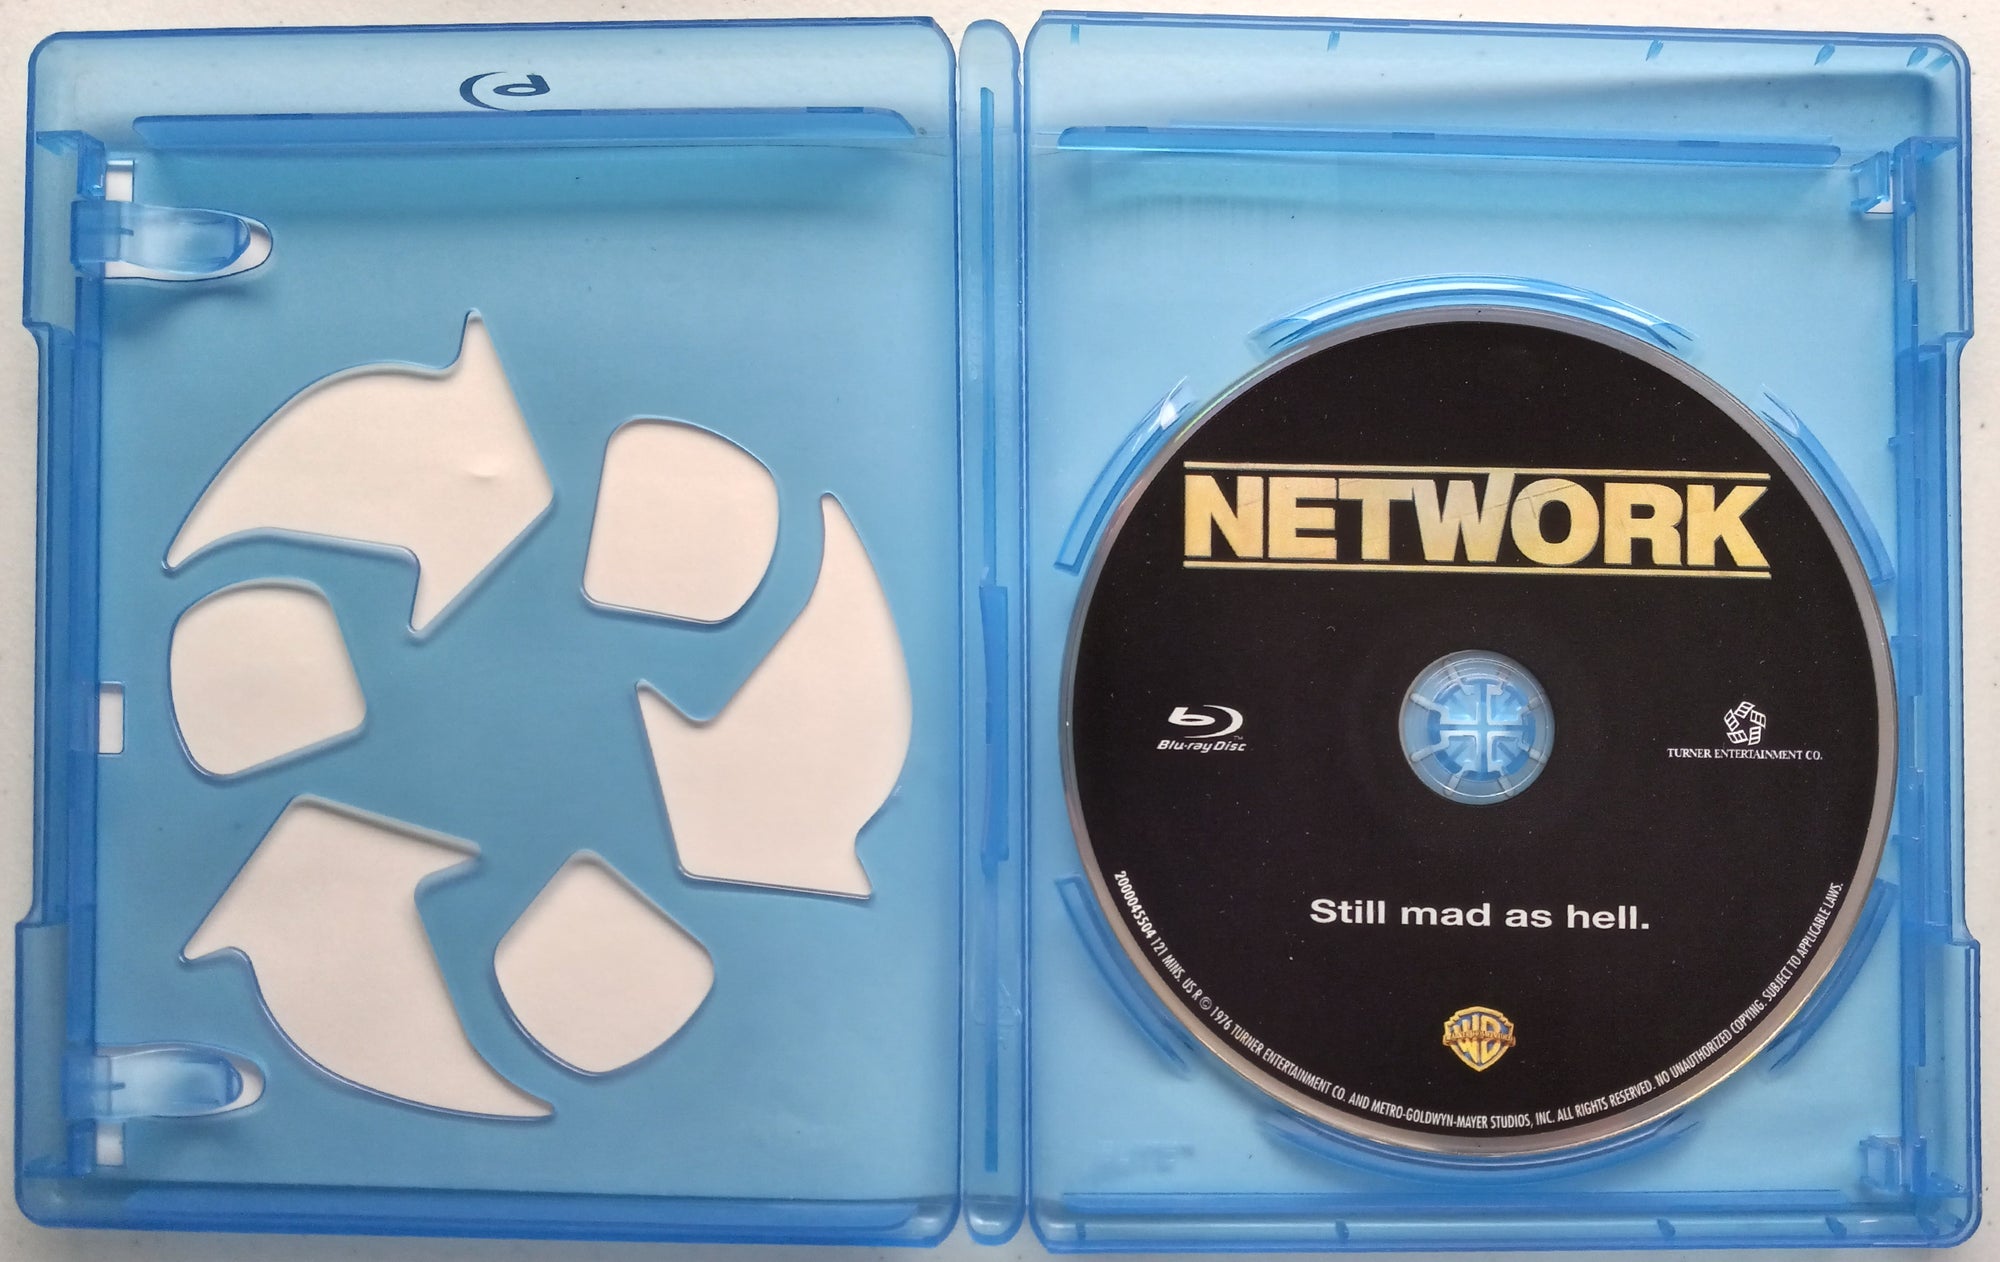 NETWORK - Blu-Ray, 2011